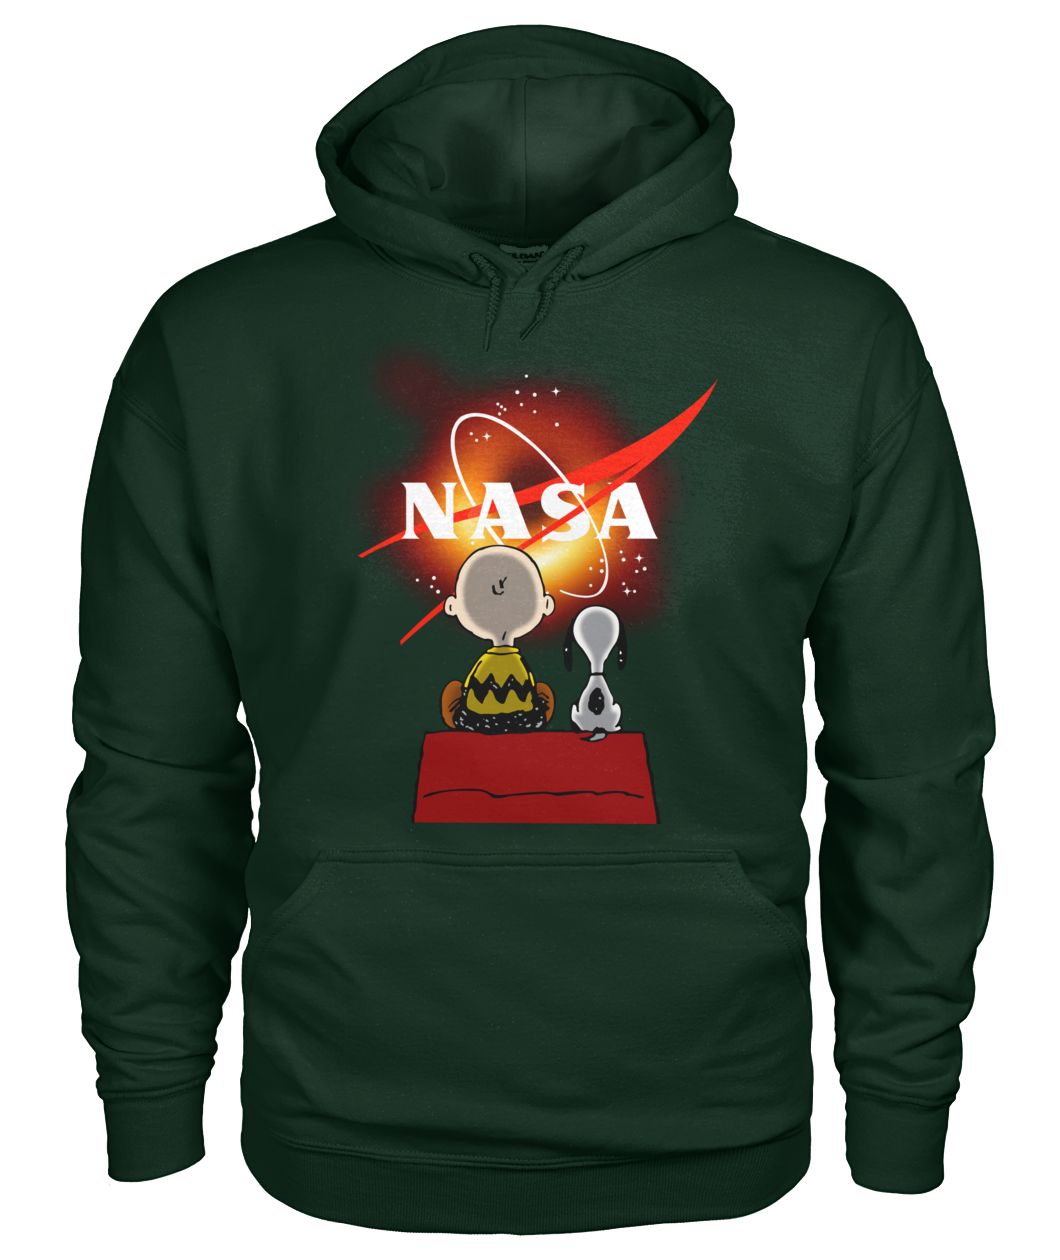 Snoopy and charlie brown black hole NASA gildan hoodie